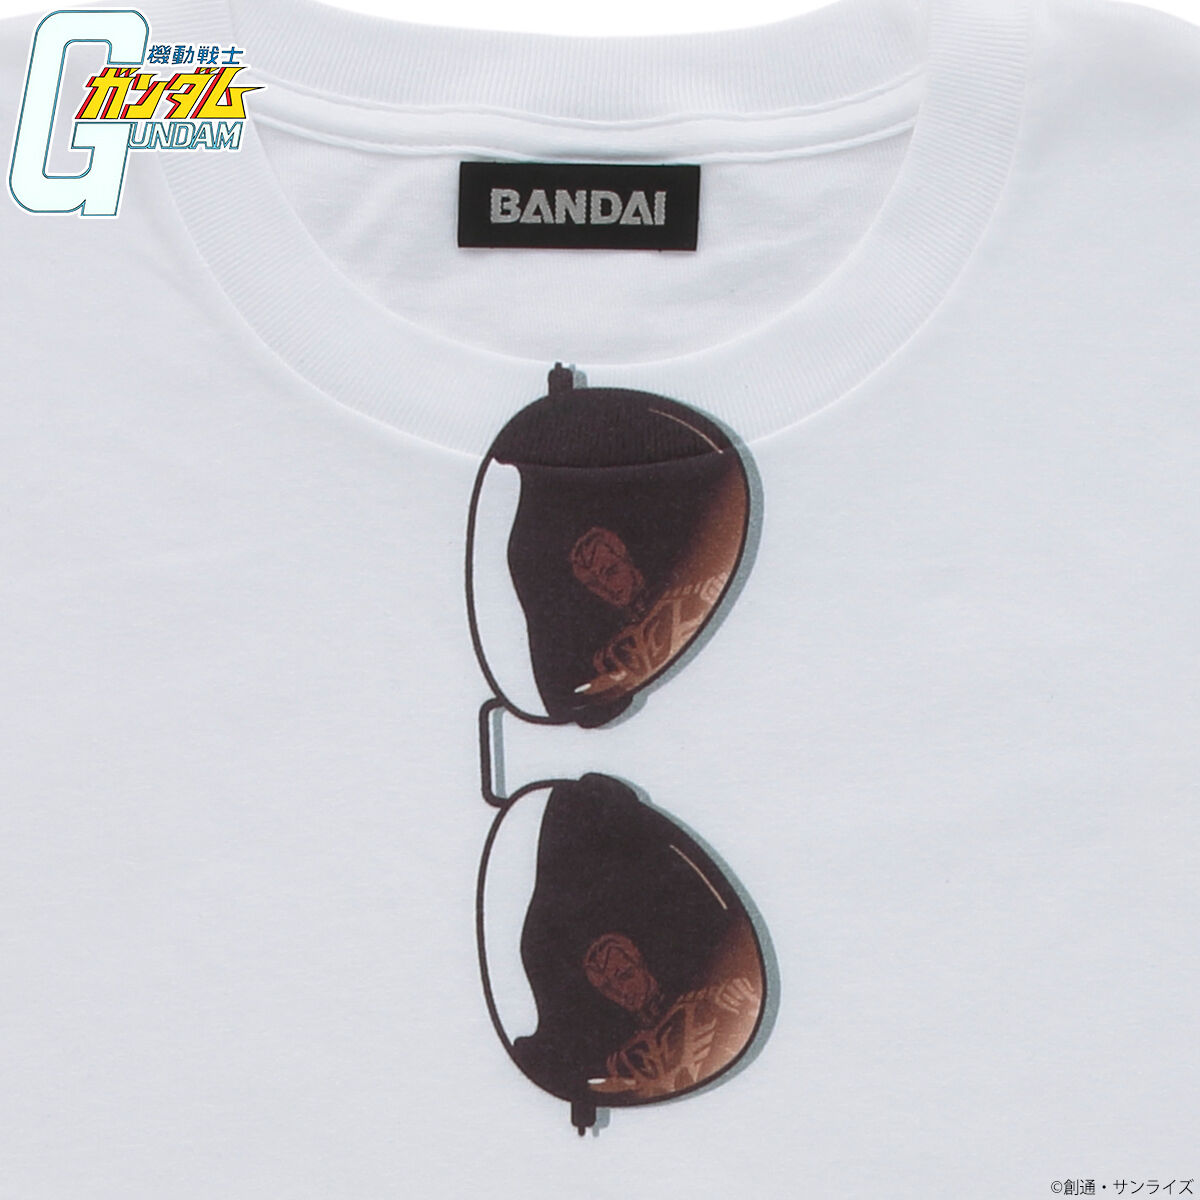 Mobile Suit Gundam Char's Sunglasses T-Shirt